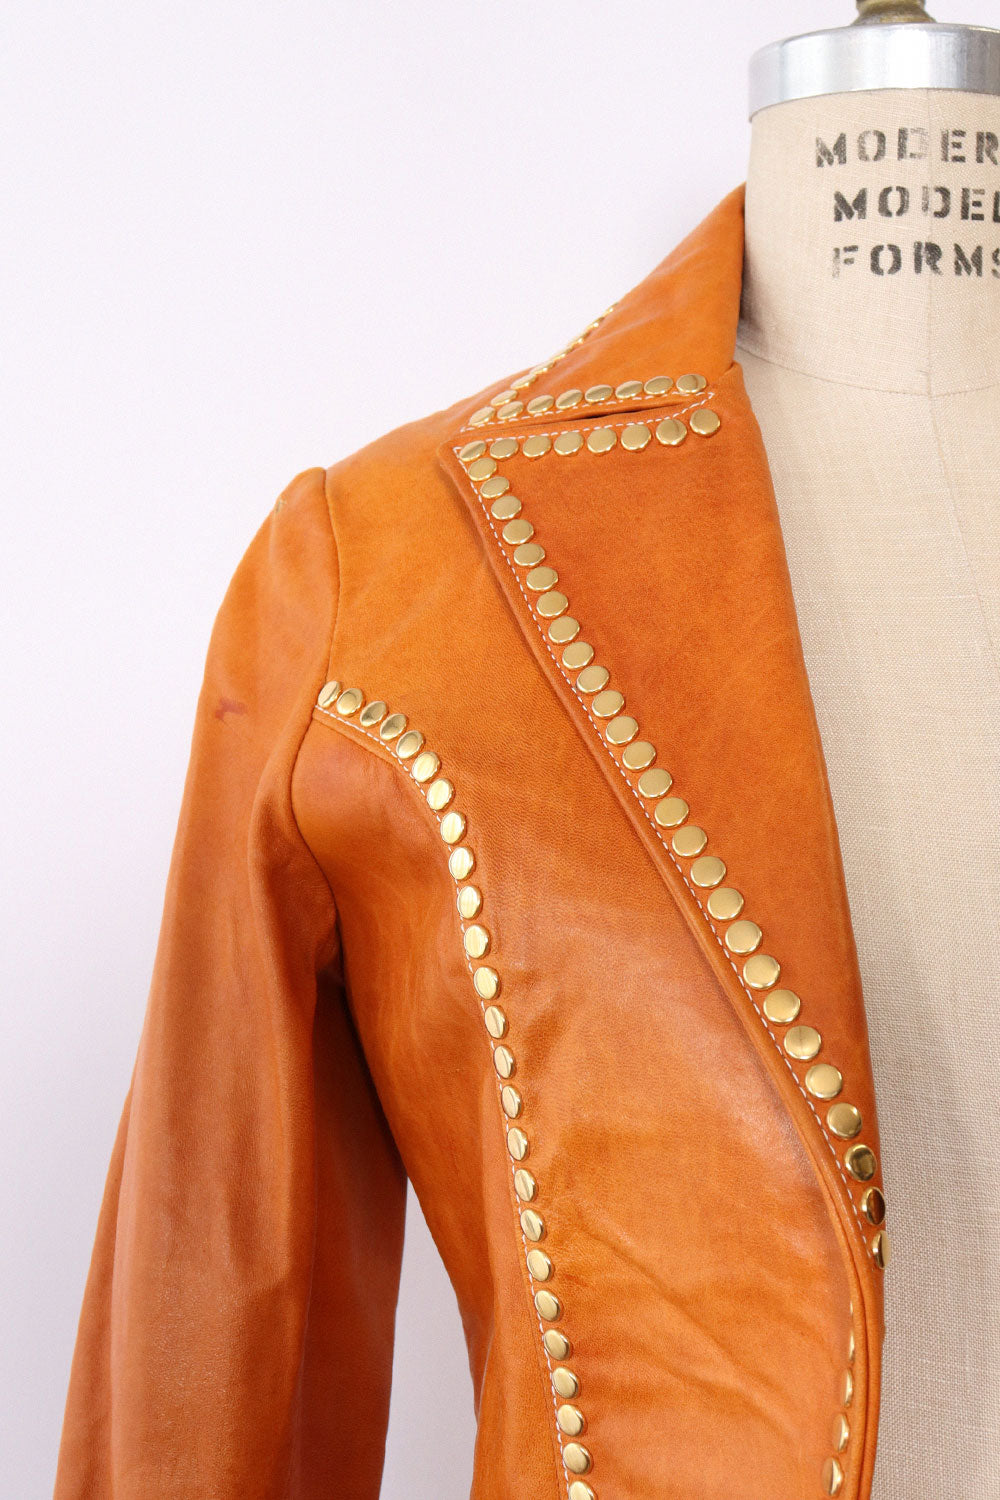 Studded Cognac Leather Jacket XS/S